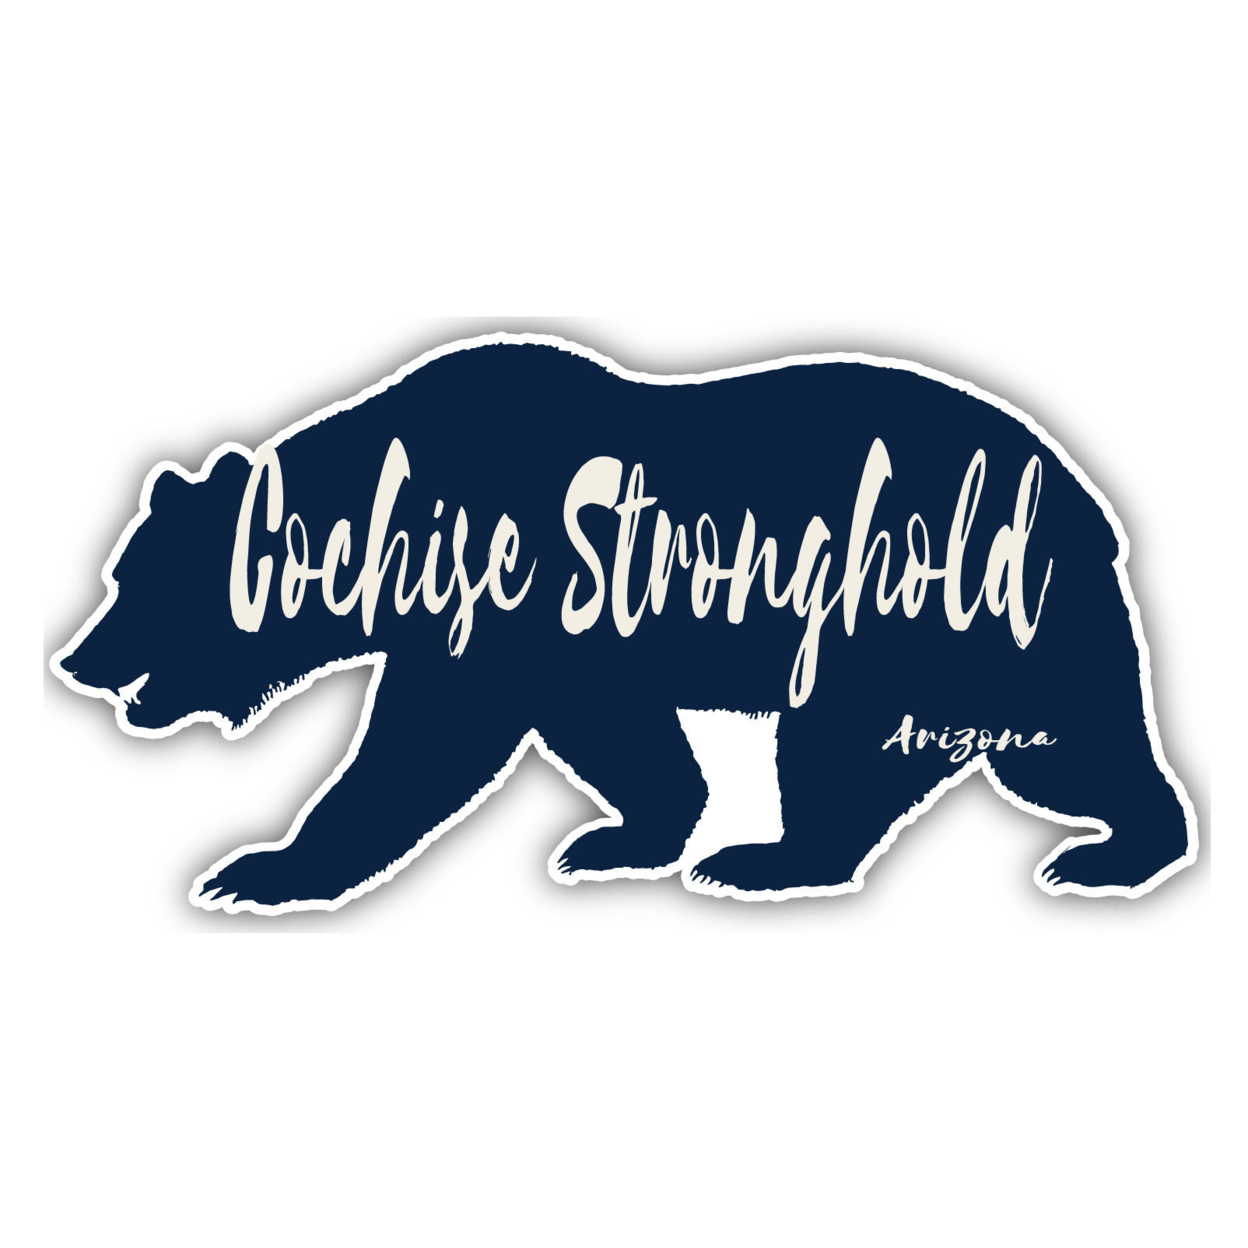 Cochise Stronghold Arizona Souvenir Decorative Stickers (Choose Theme And Size) - Single Unit, 10-Inch, Bear